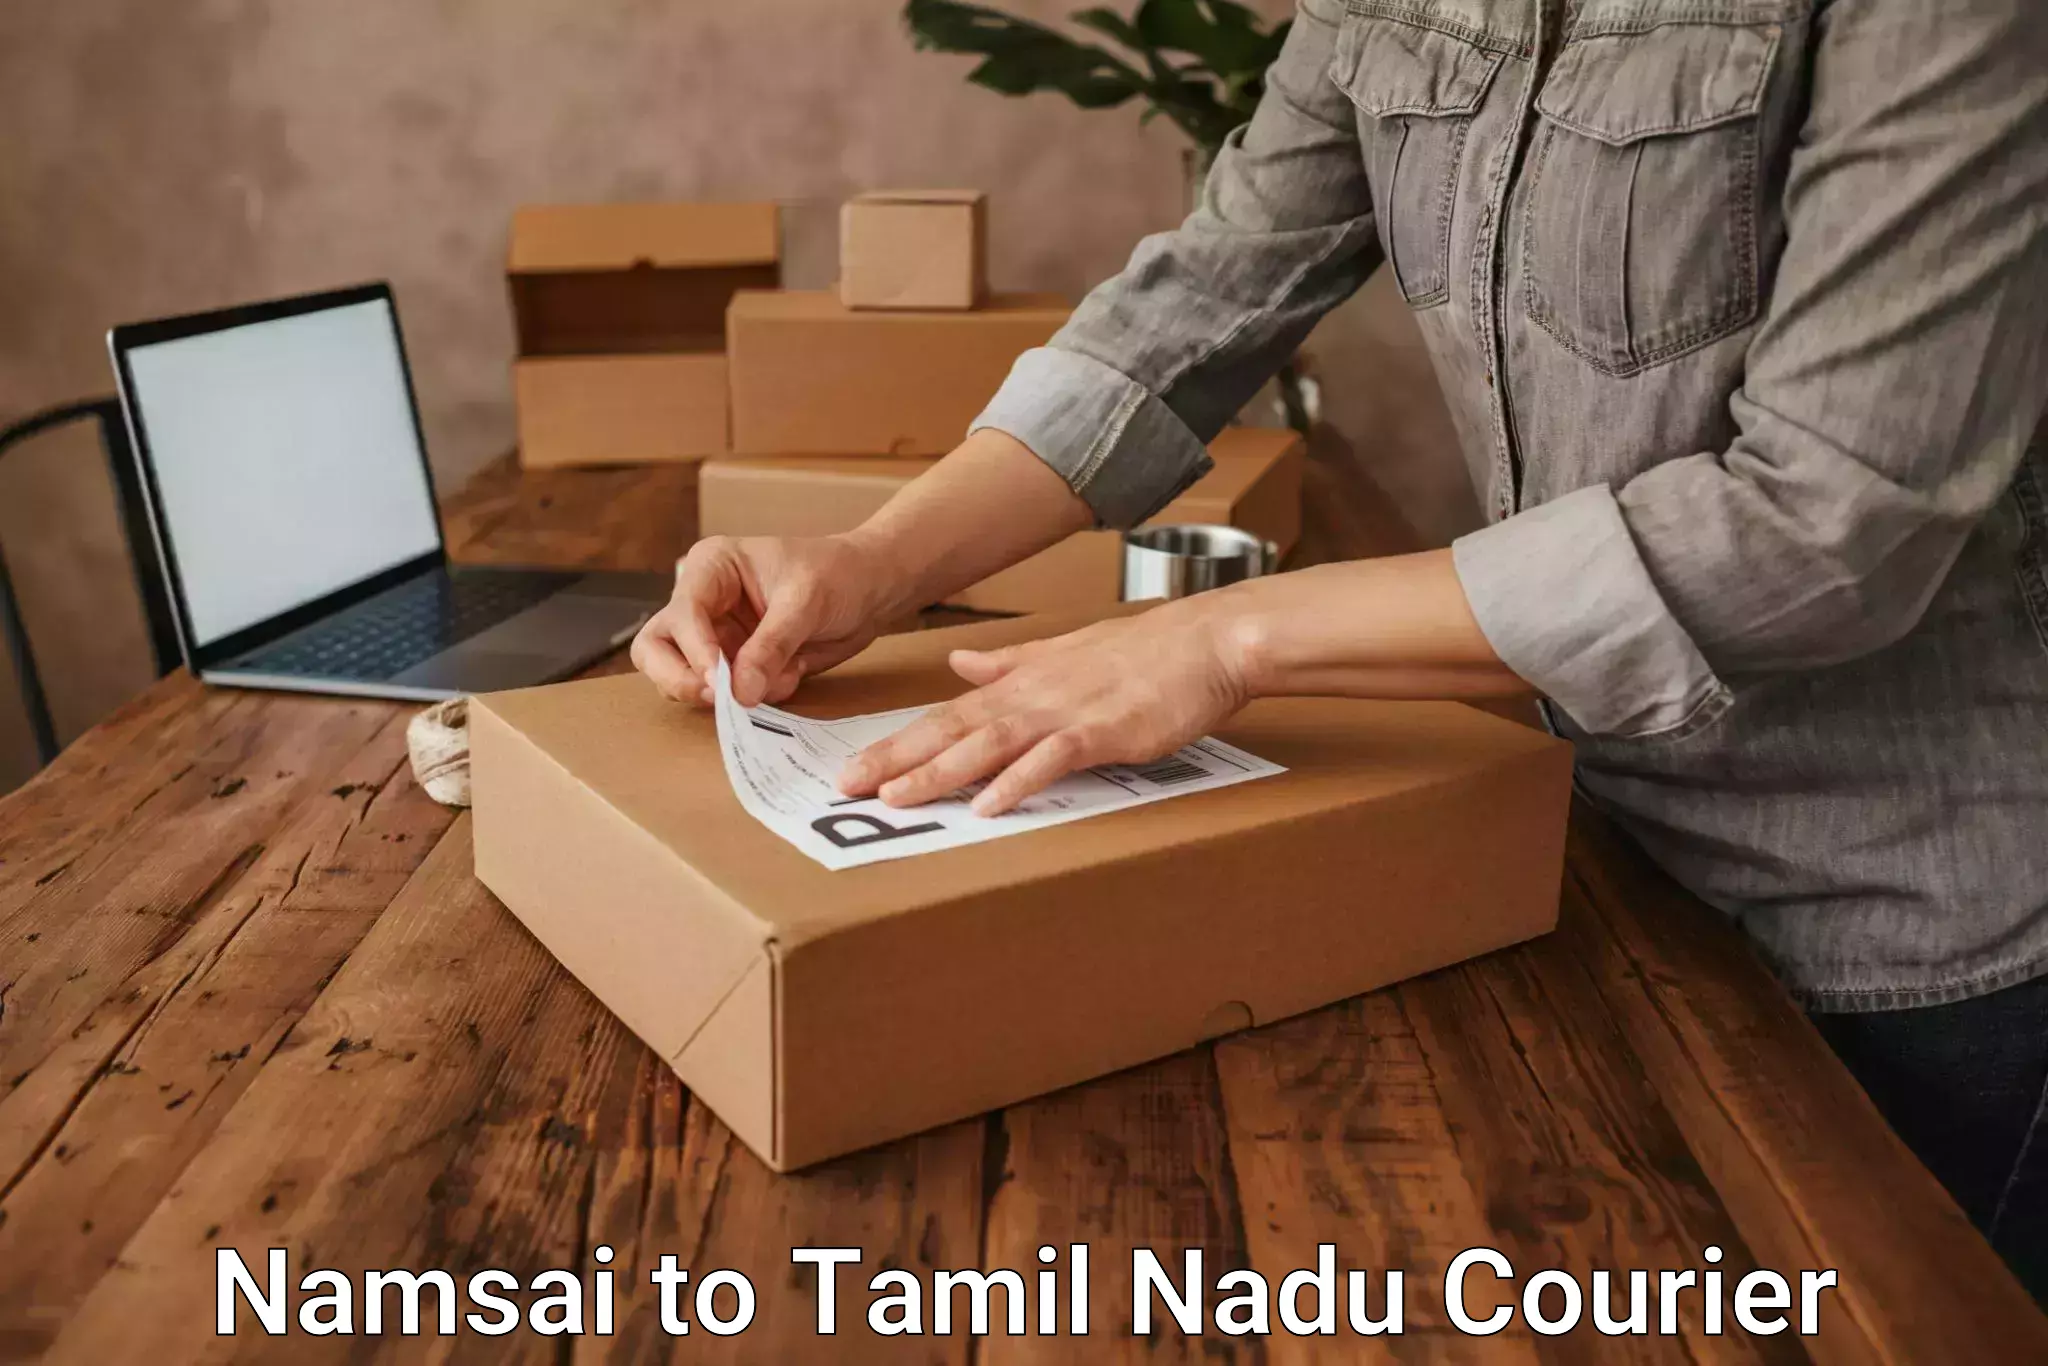 Efficient parcel tracking Namsai to Thisayanvilai